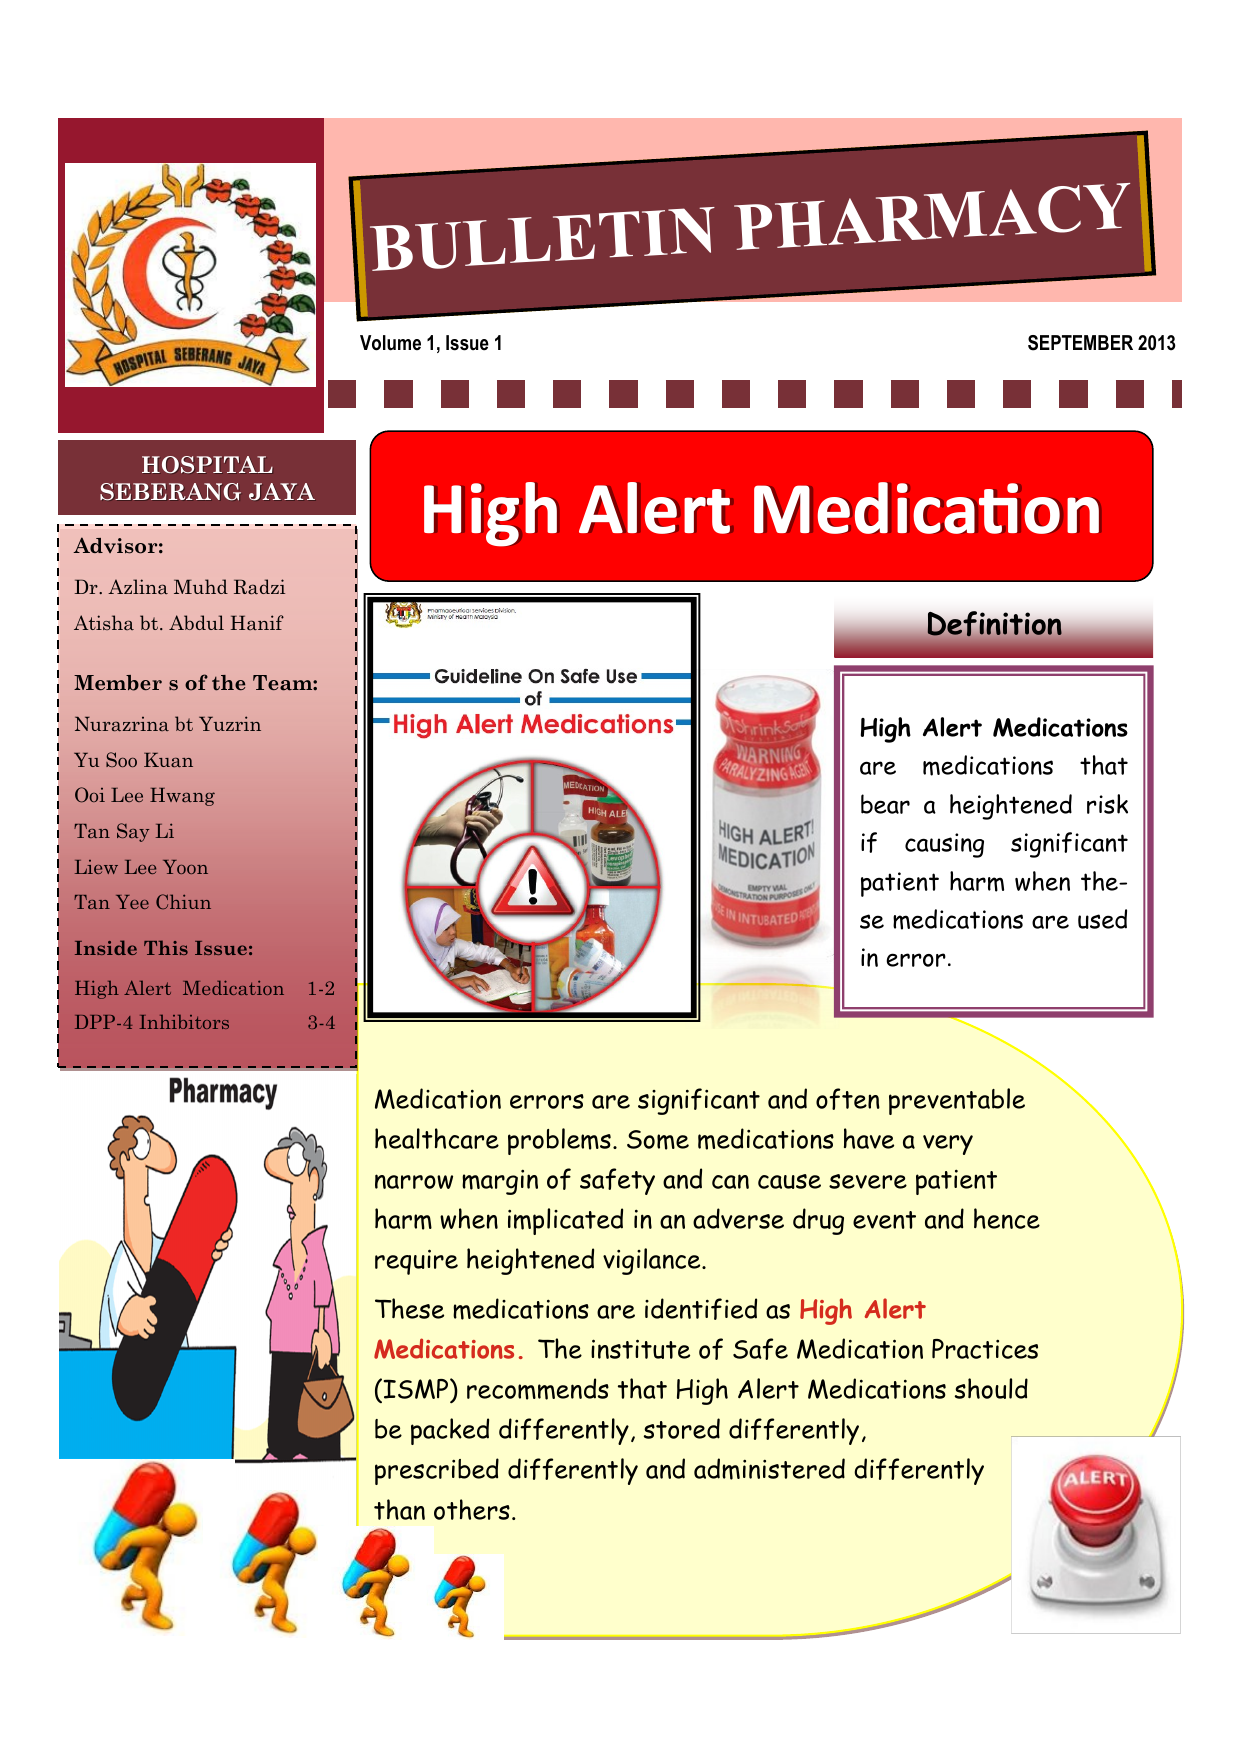 High alert medication